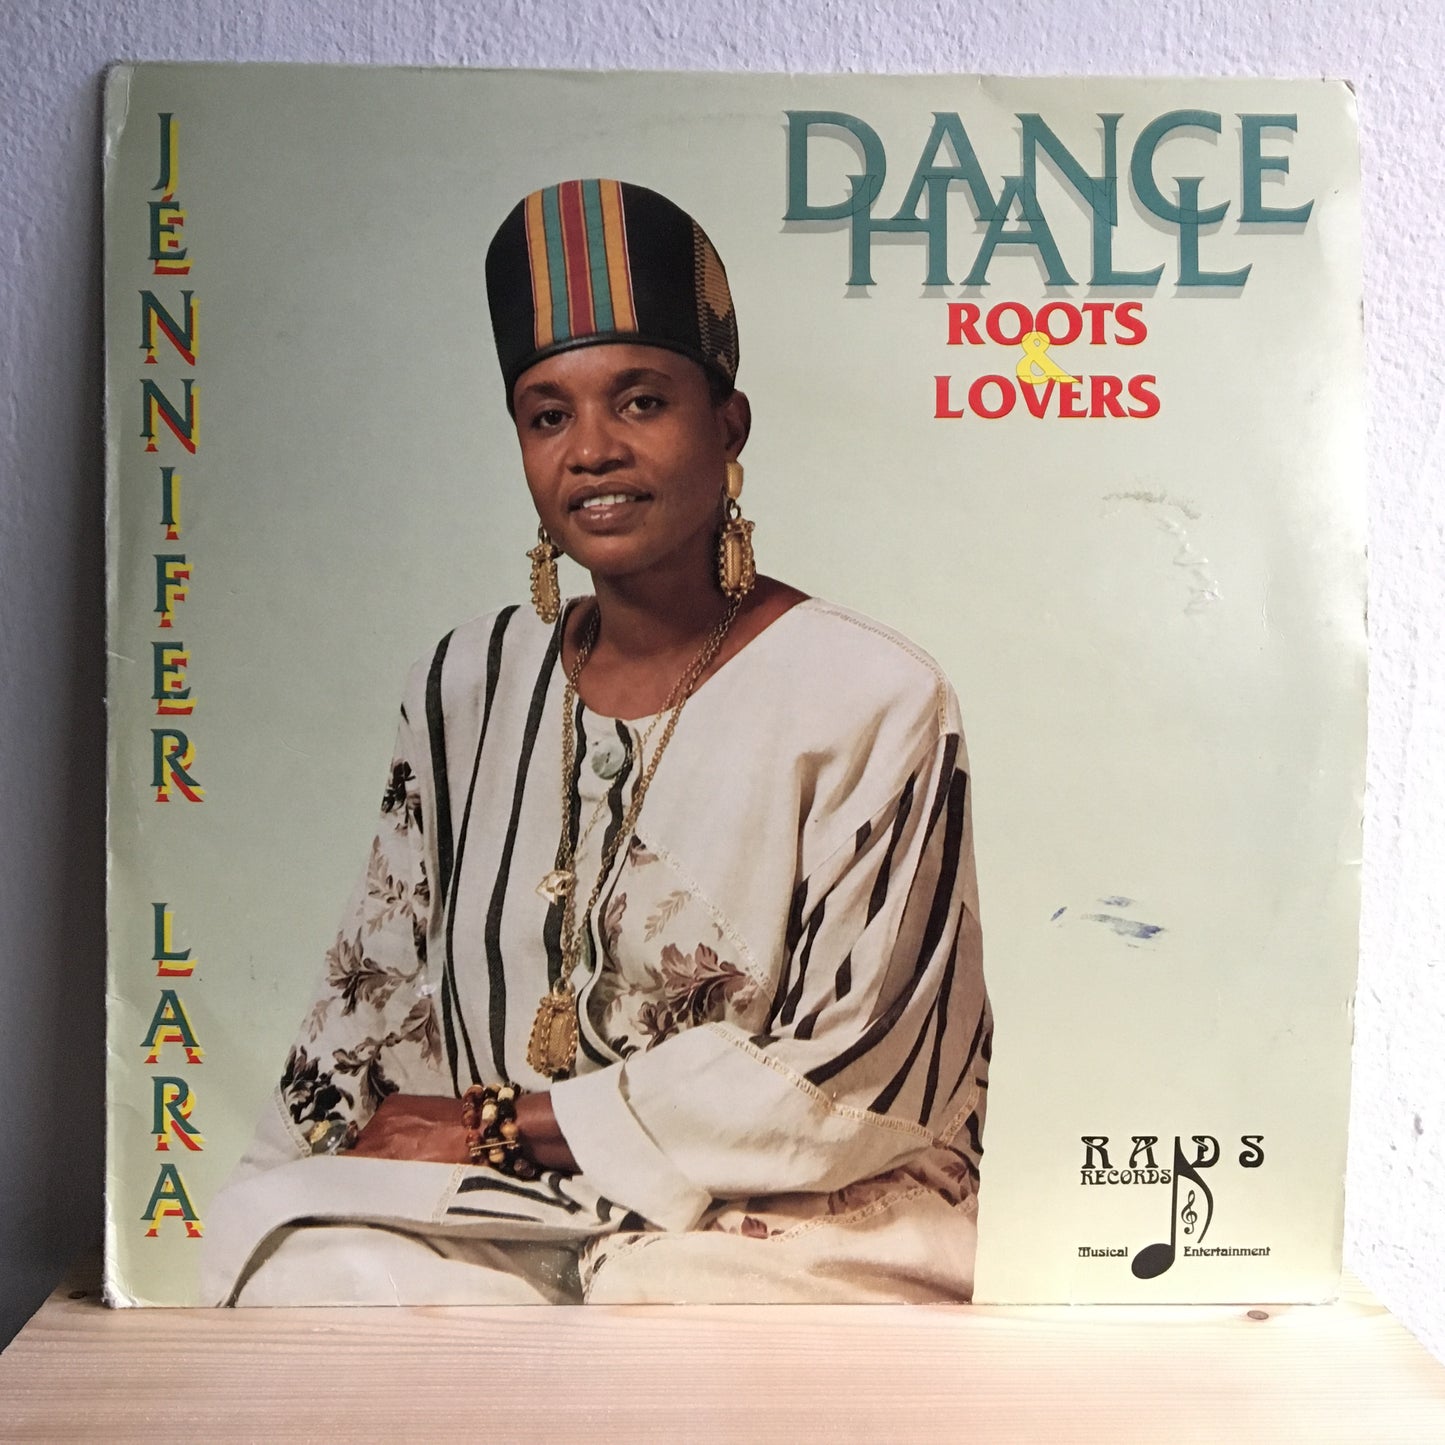 Jennifer Lara – Dancehall Roots & Lovers